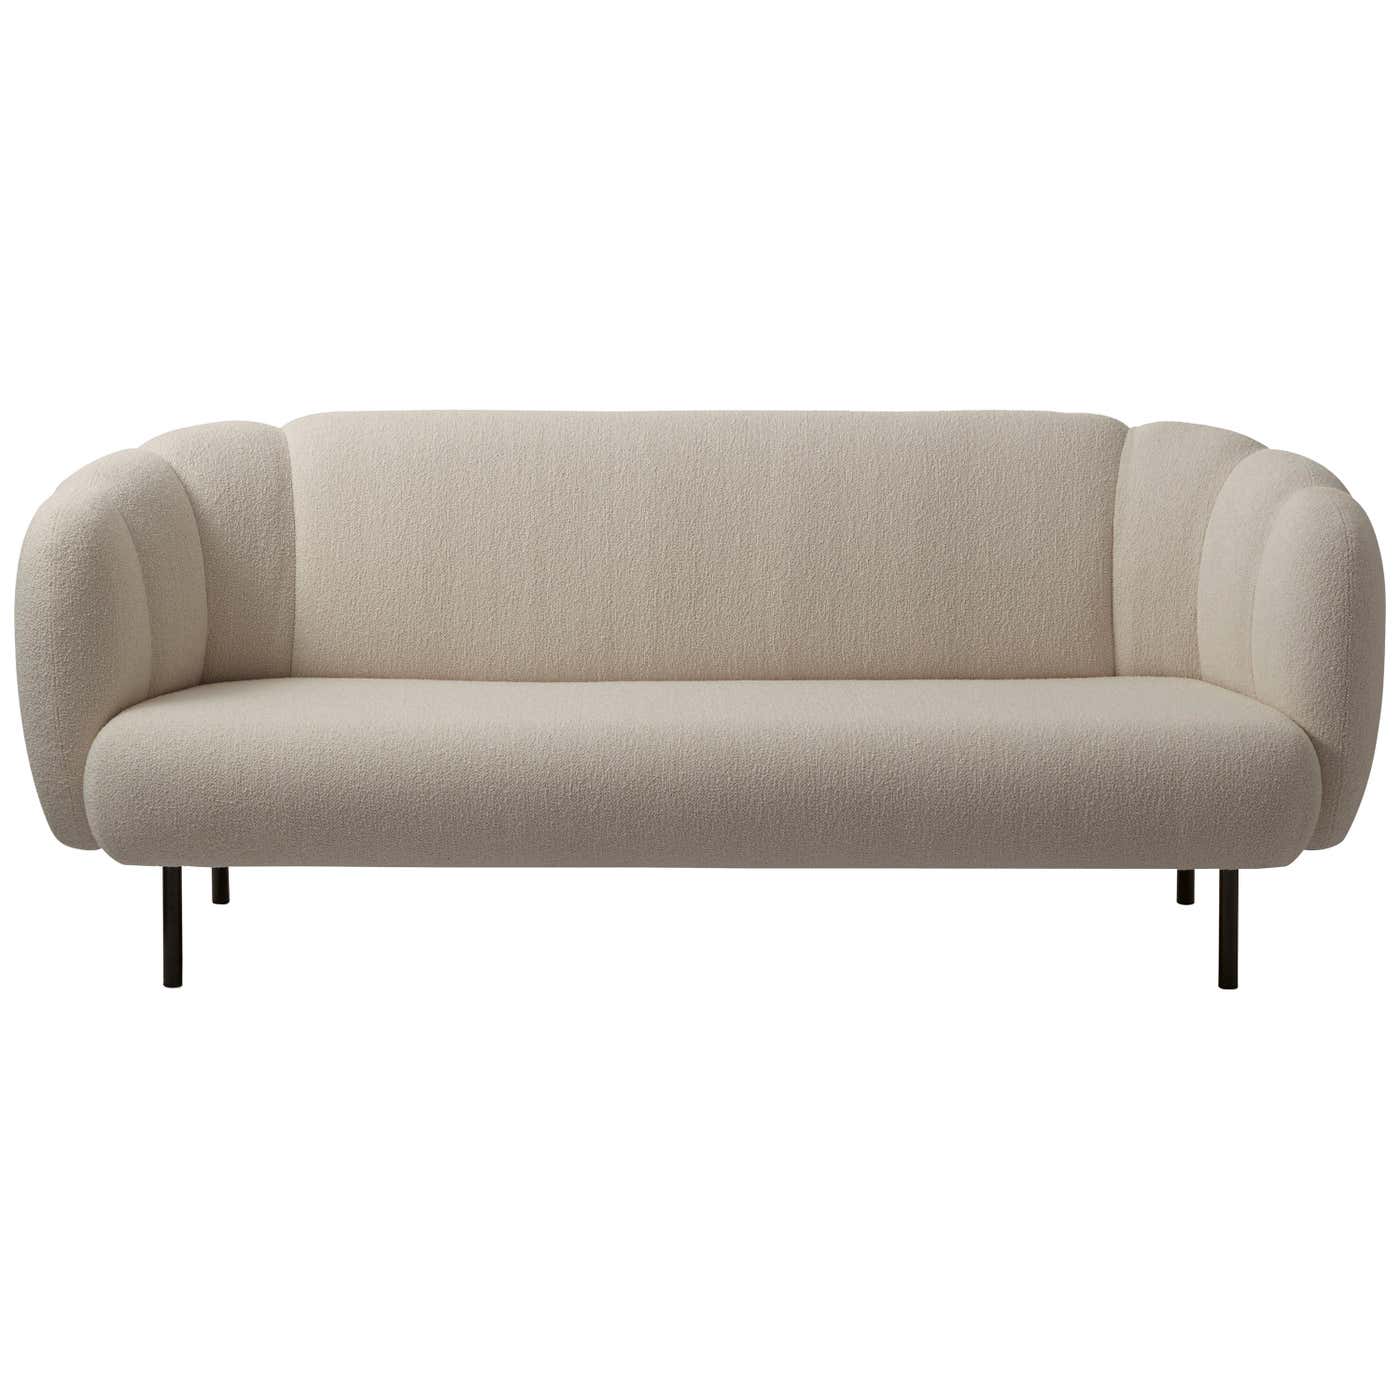 Customizable Cape 3-Seat Stitch Sofa, by Charlotte Høncke from Warm ...